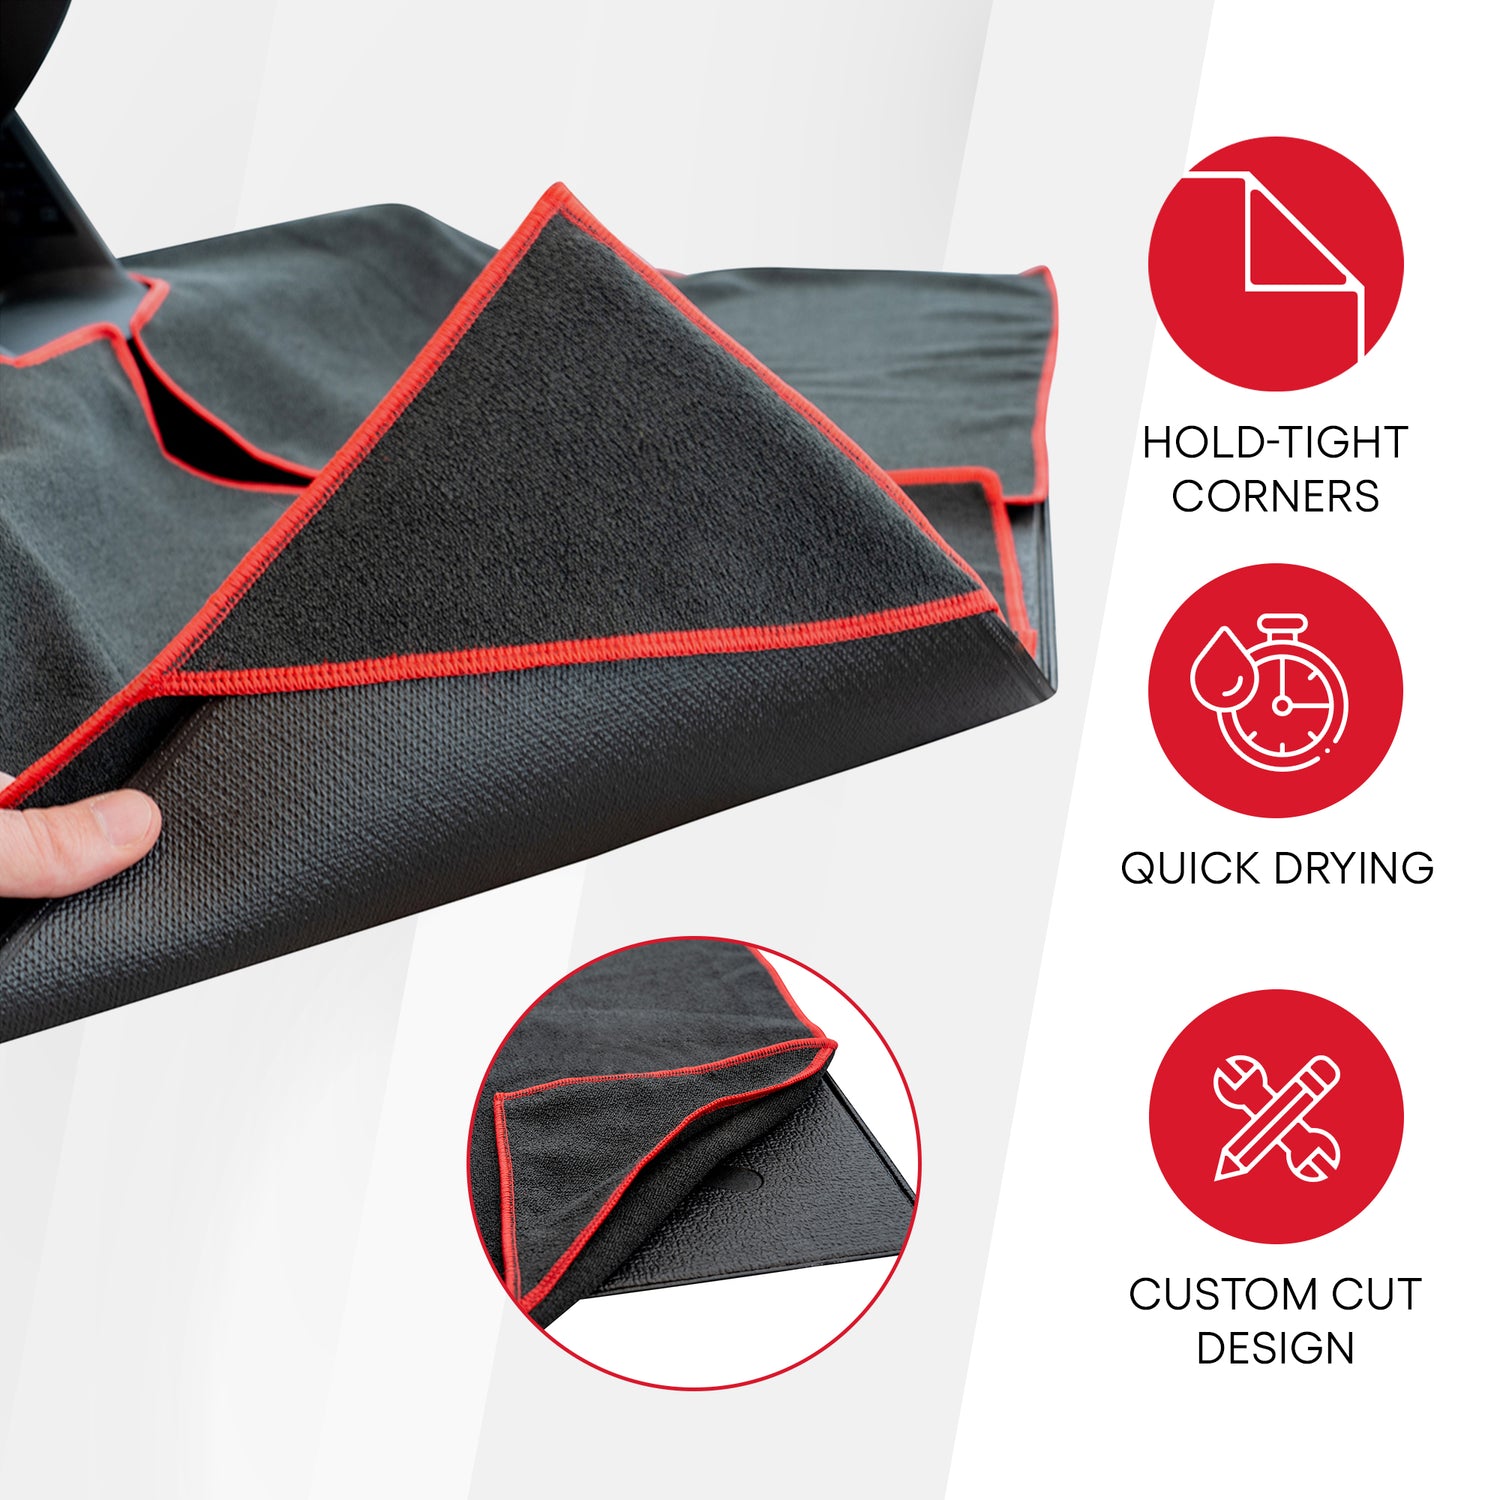 Peloton bike mat sweat towel quick-drying custom cut design